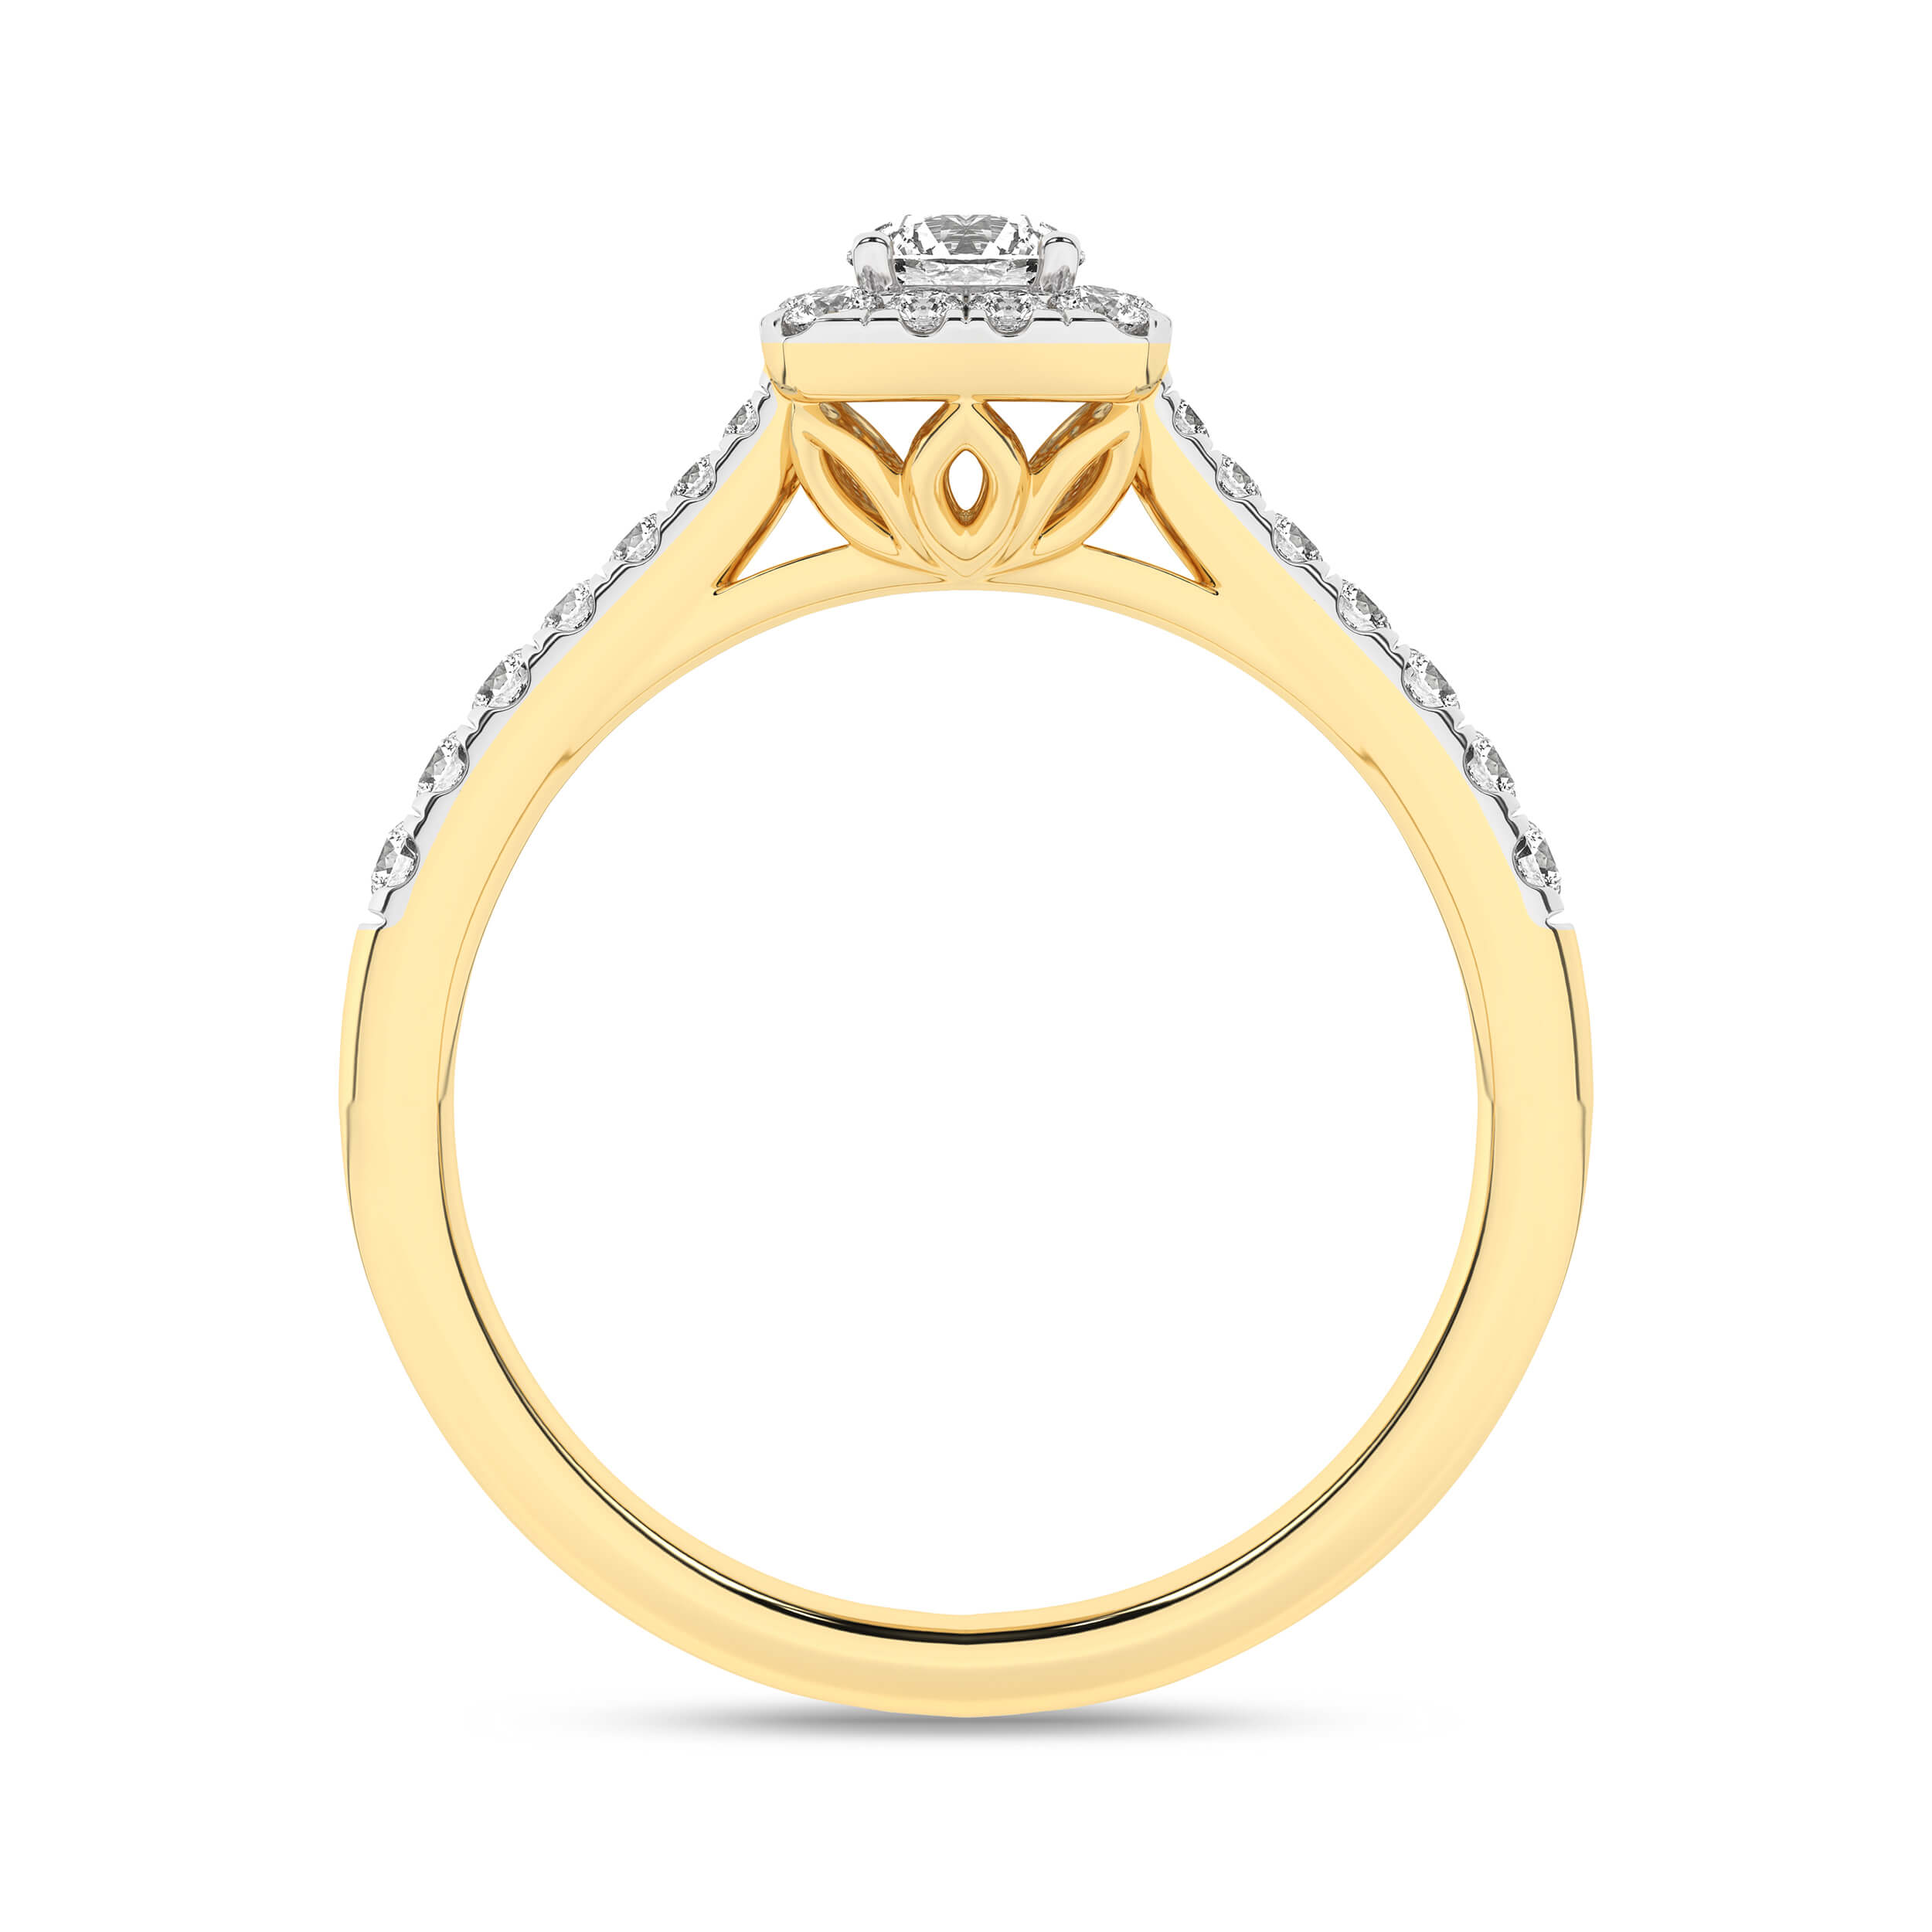 Inel de logodna din Aur Galben 14K cu Diamante 0.50Ct, articol RB17645EG, previzualizare foto 1